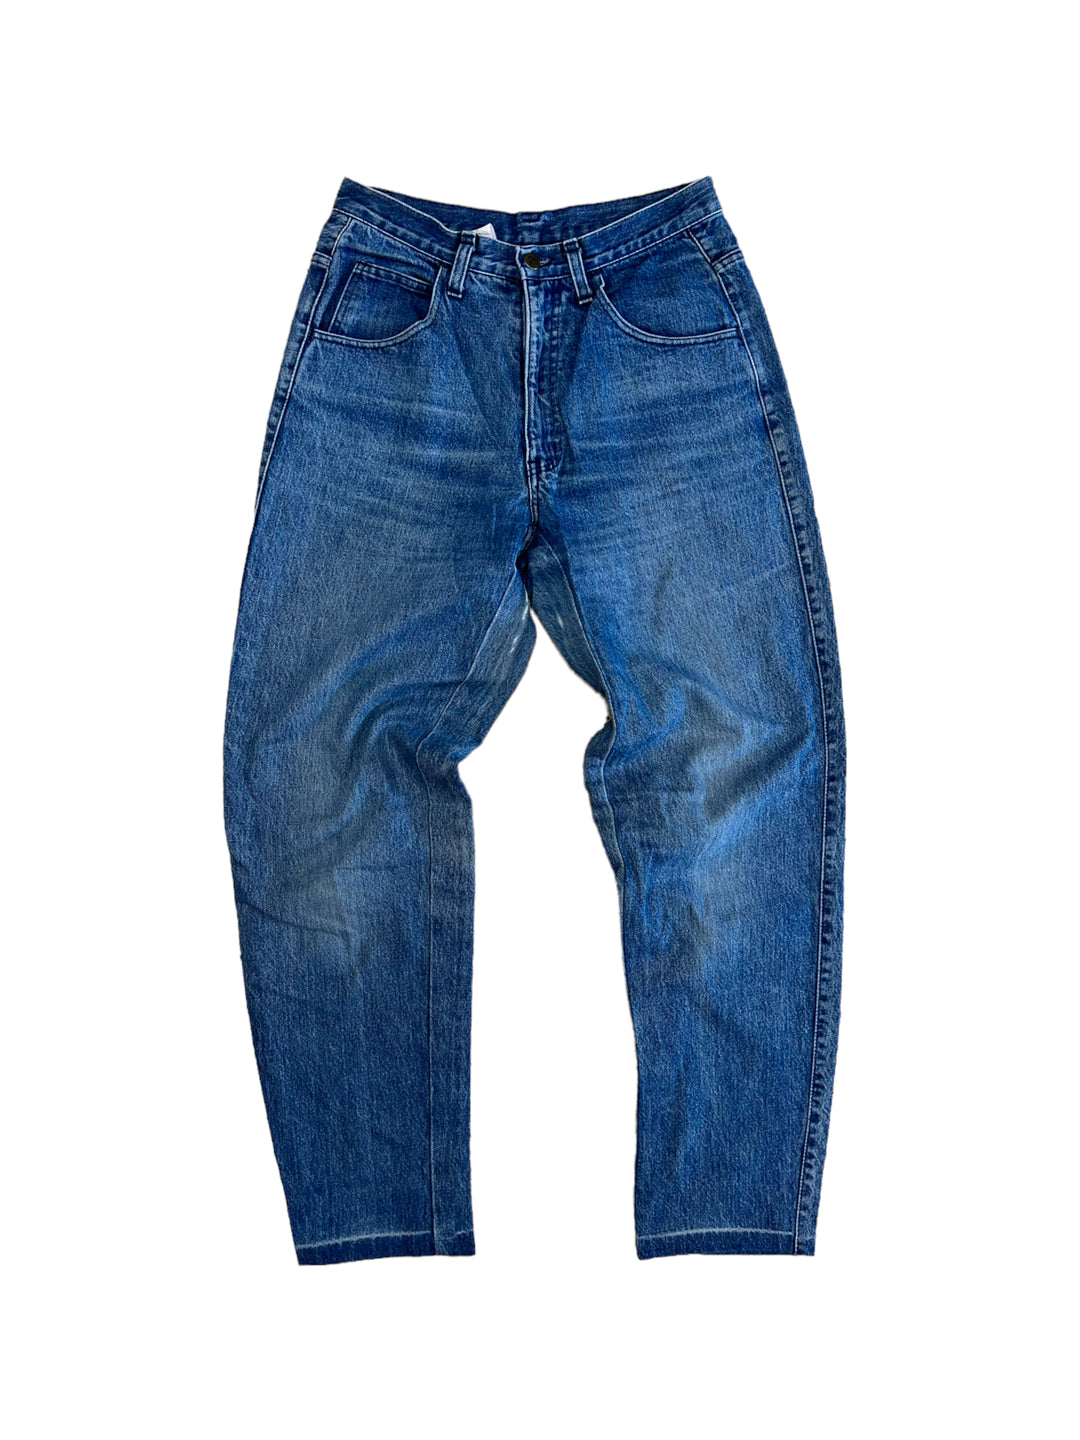 Armani High Waist Jeans Women’s Medium(38)